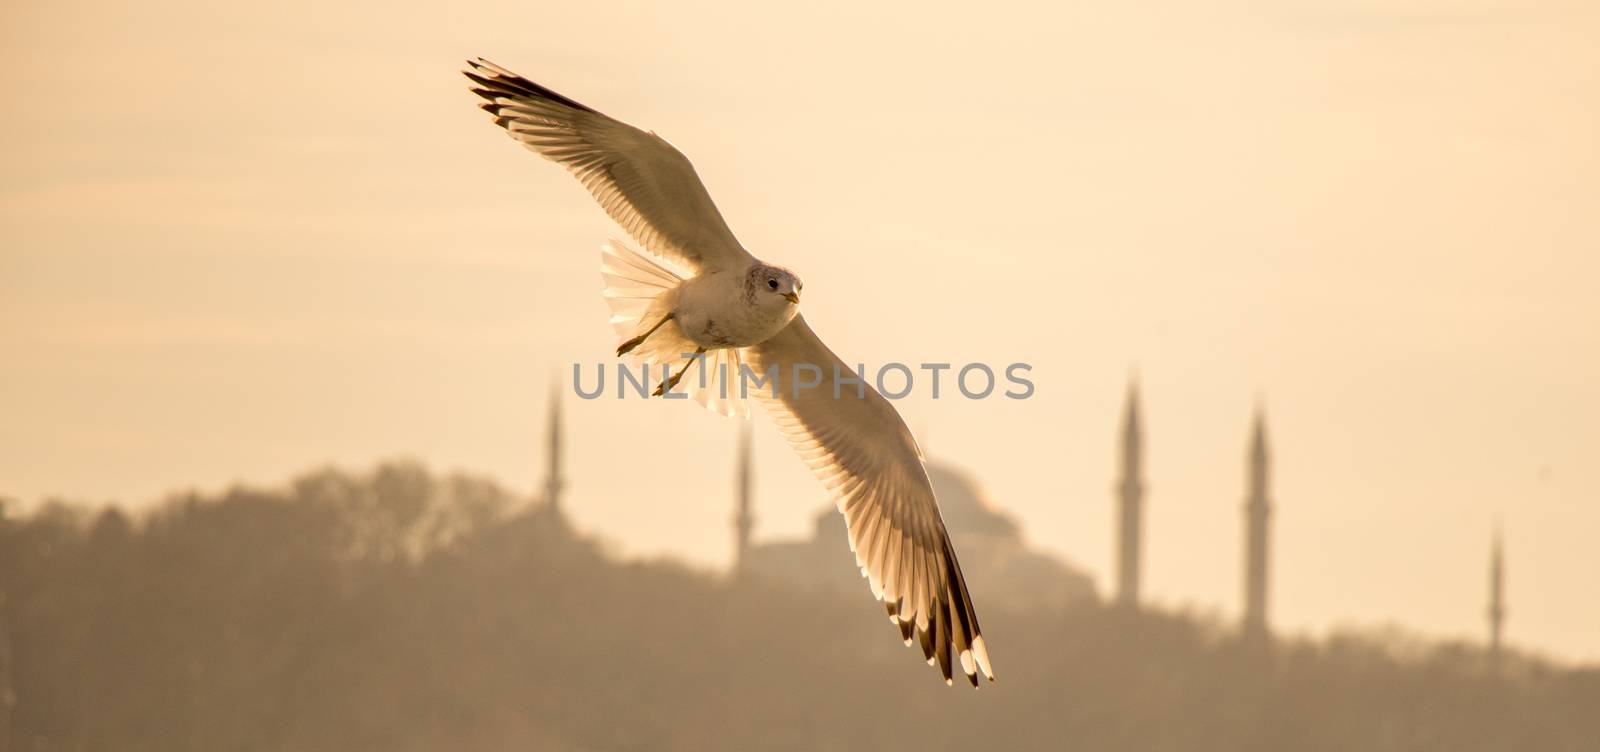 Seagulls flying in sky  in Istanbul by berkay